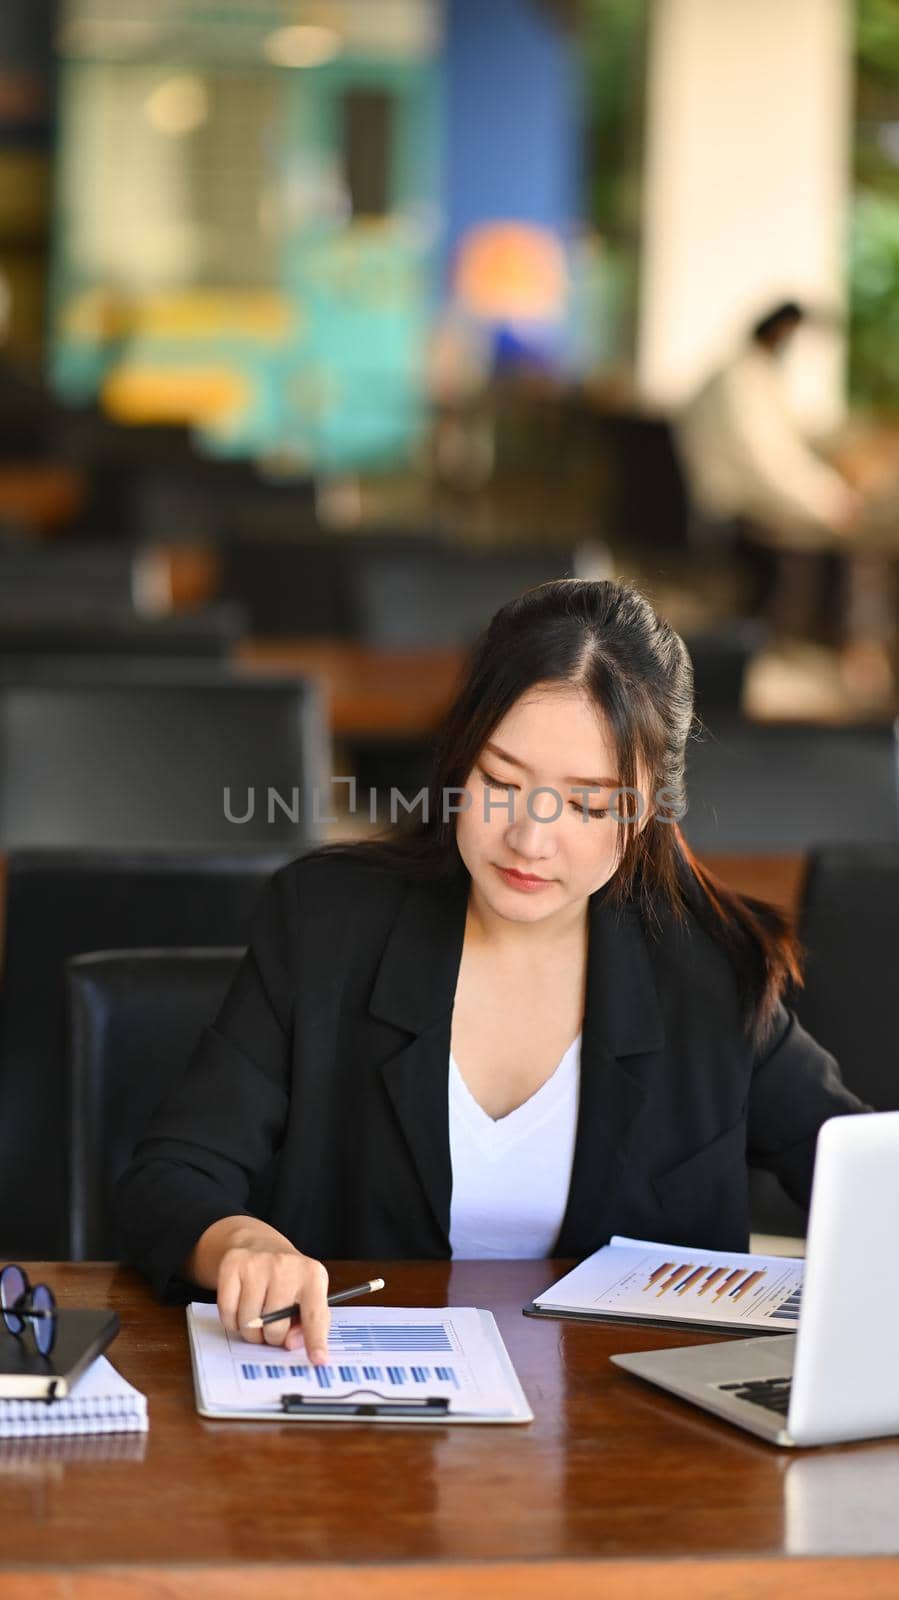 Portrait asian businesswoman analyzing business graph at office desk. by prathanchorruangsak